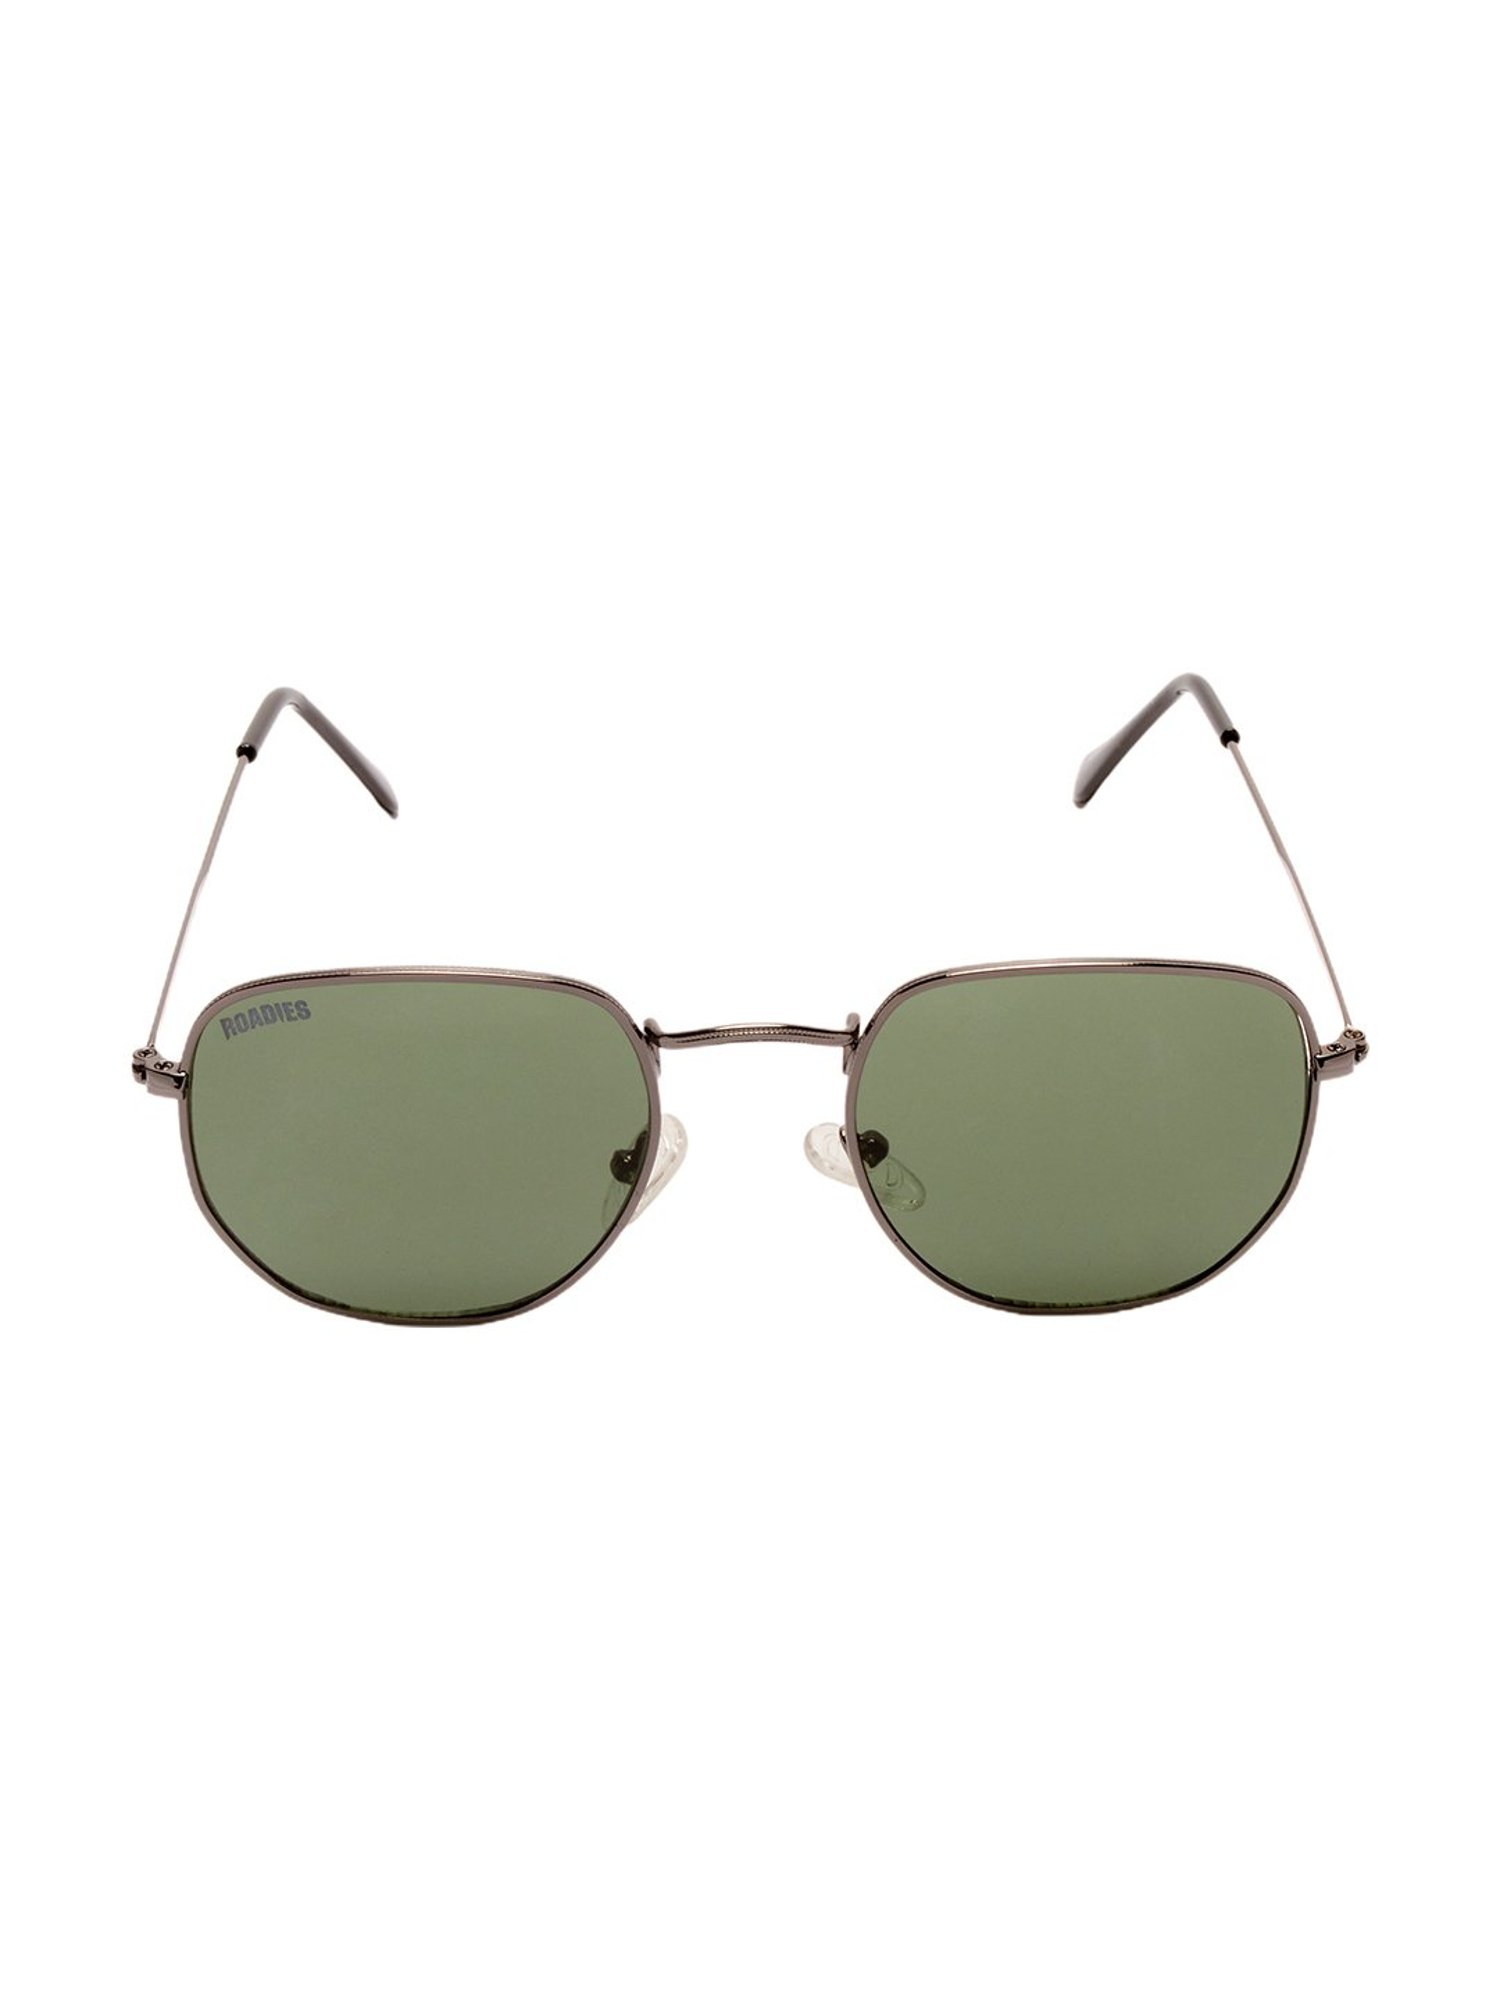 Buy Roadies Spectacle Sunglasses Black For Men & Women Online @ Best Prices  in India | Flipkart.com